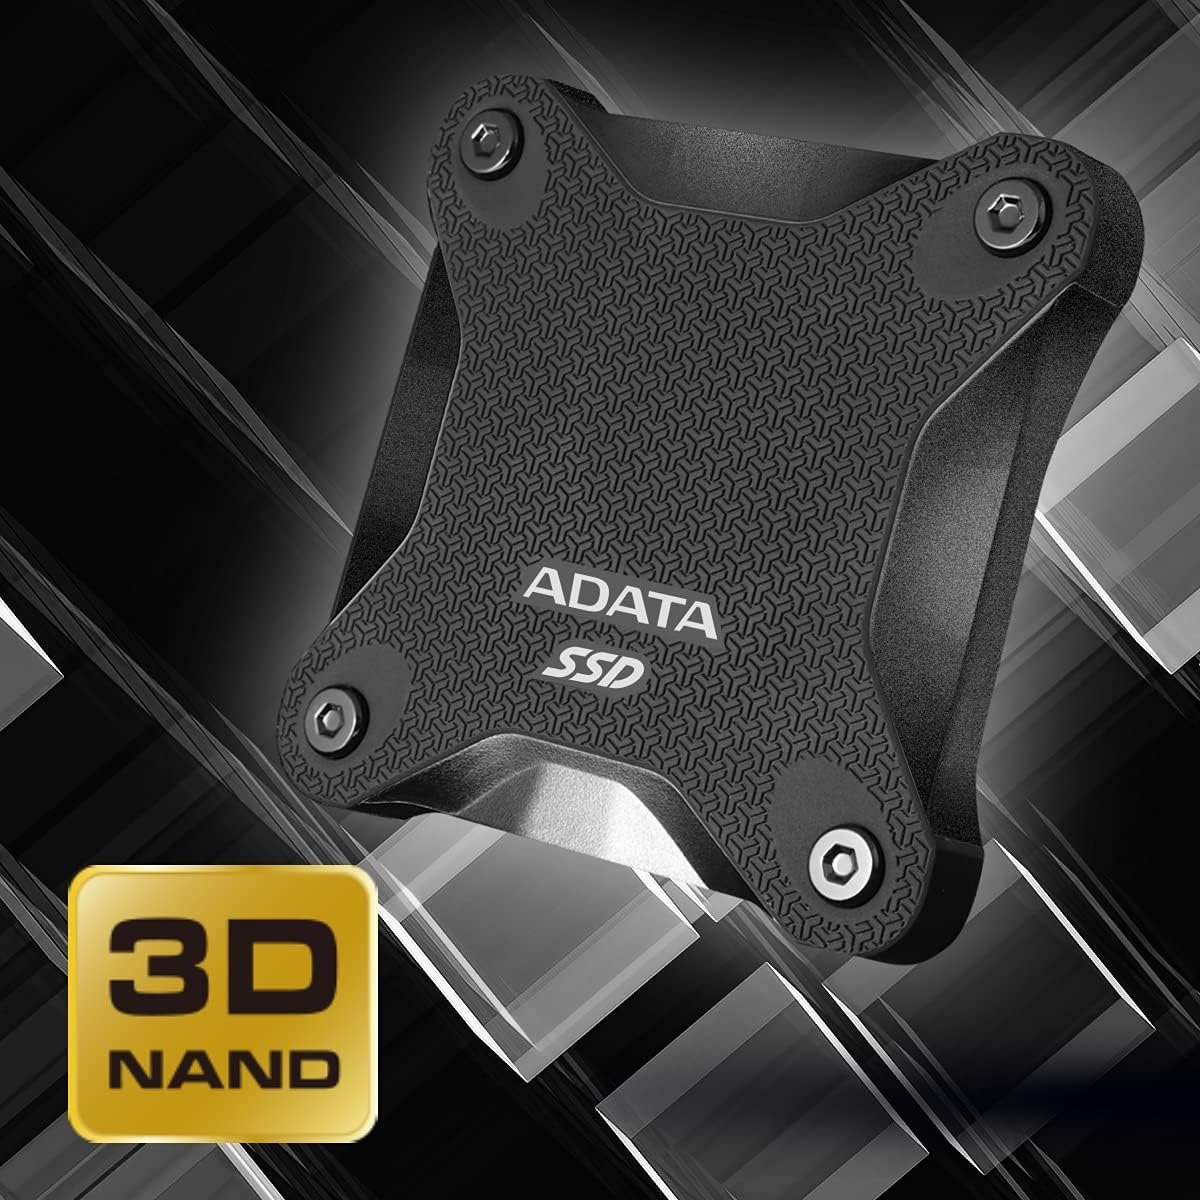 ADATA SD600Q 3D NAND